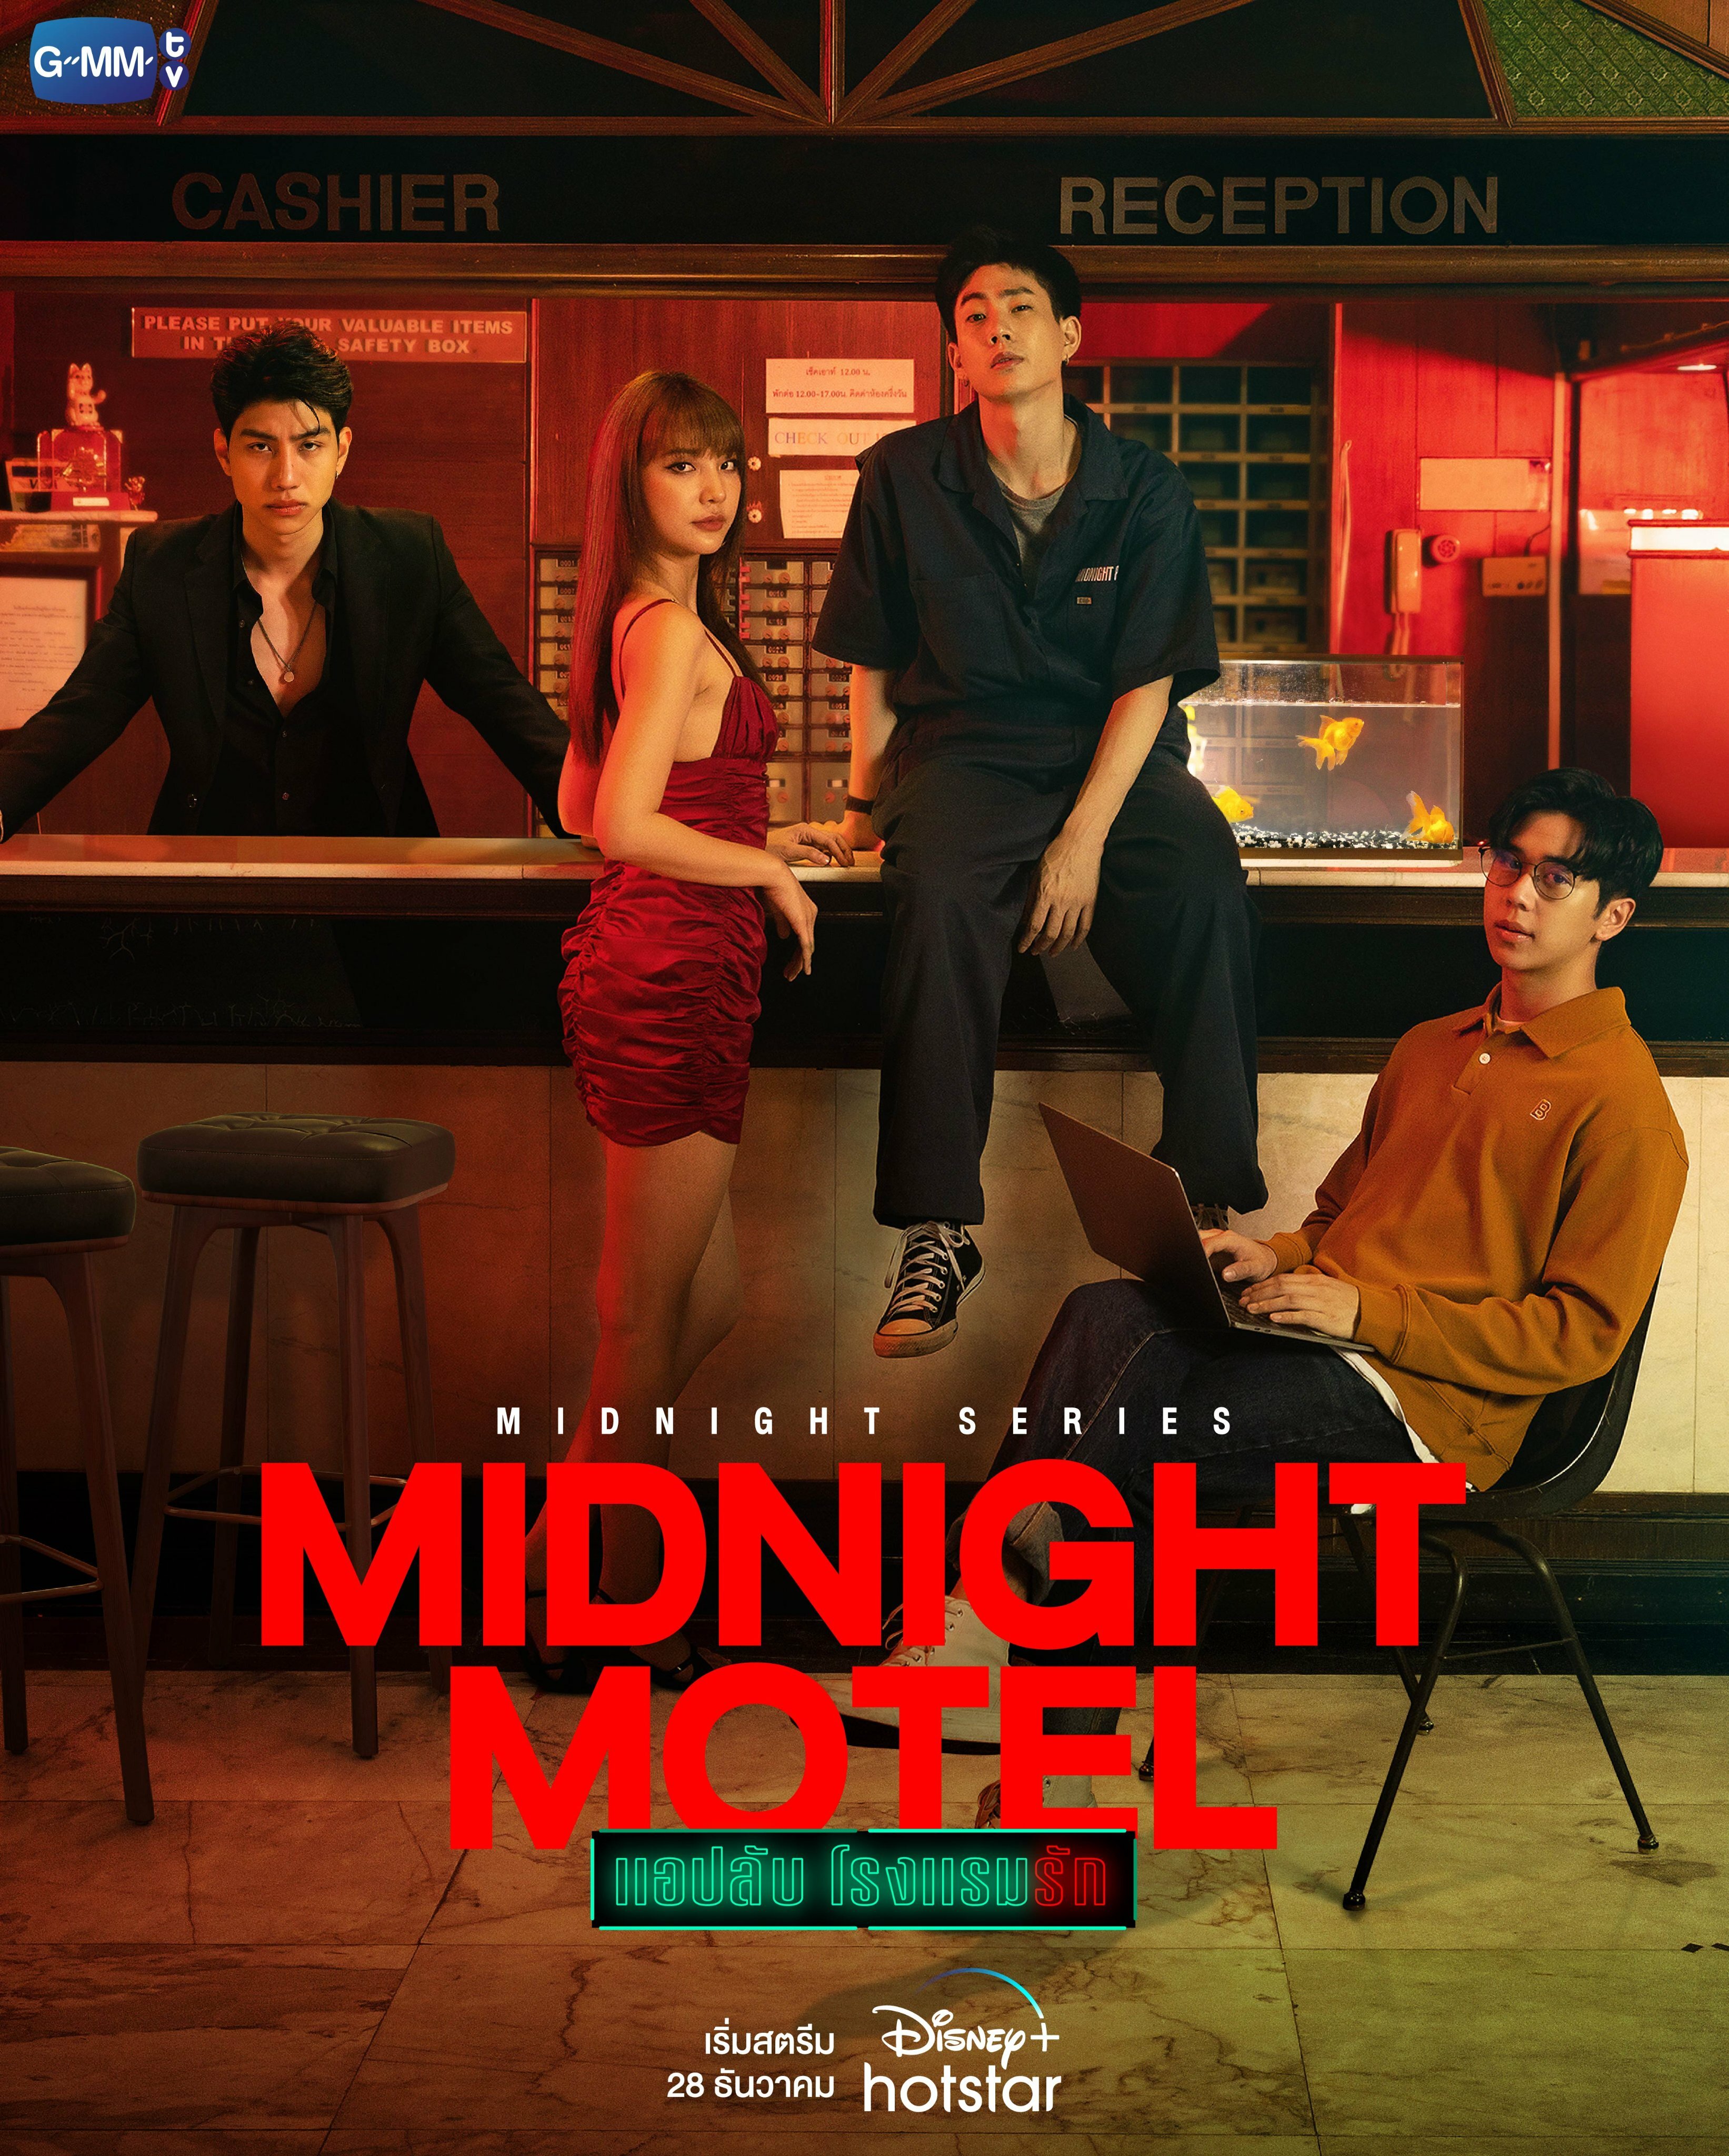 Midnight Motel ne zaman